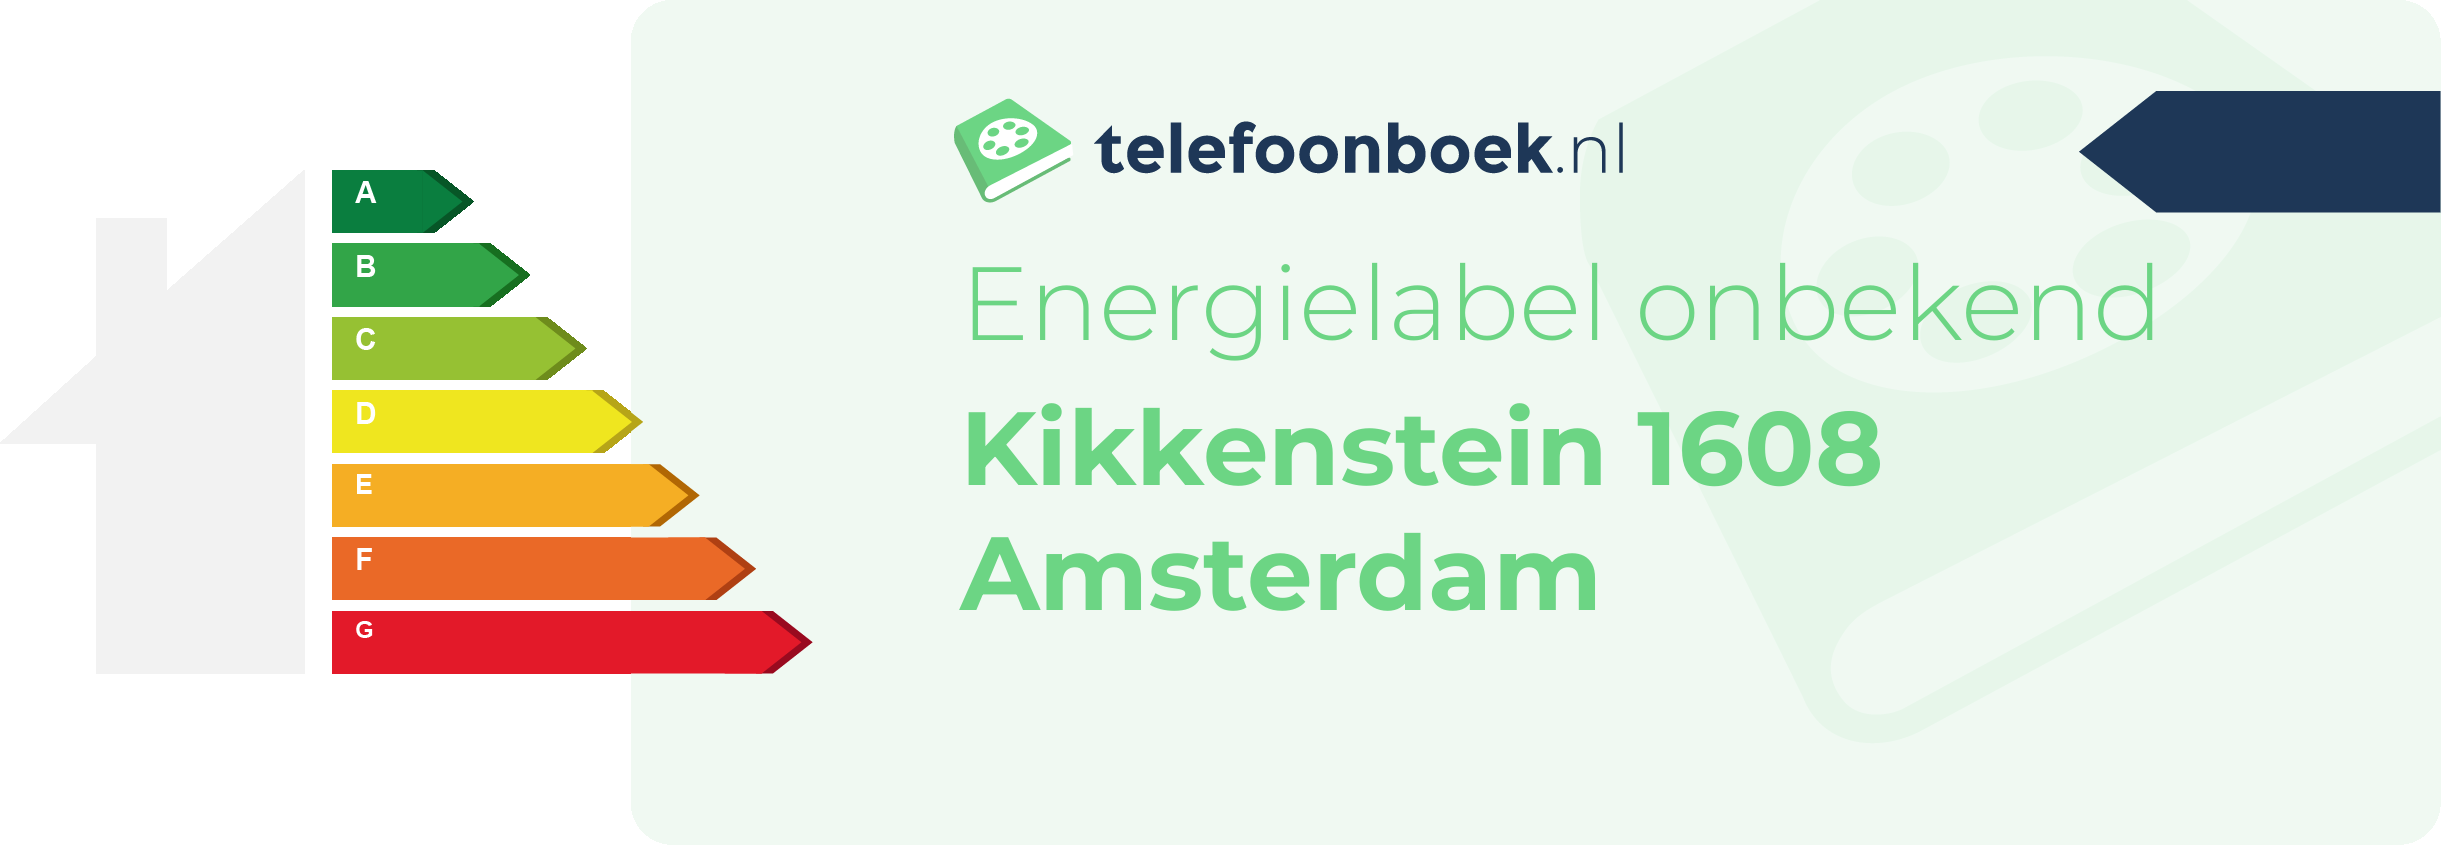 Energielabel Kikkenstein 1608 Amsterdam